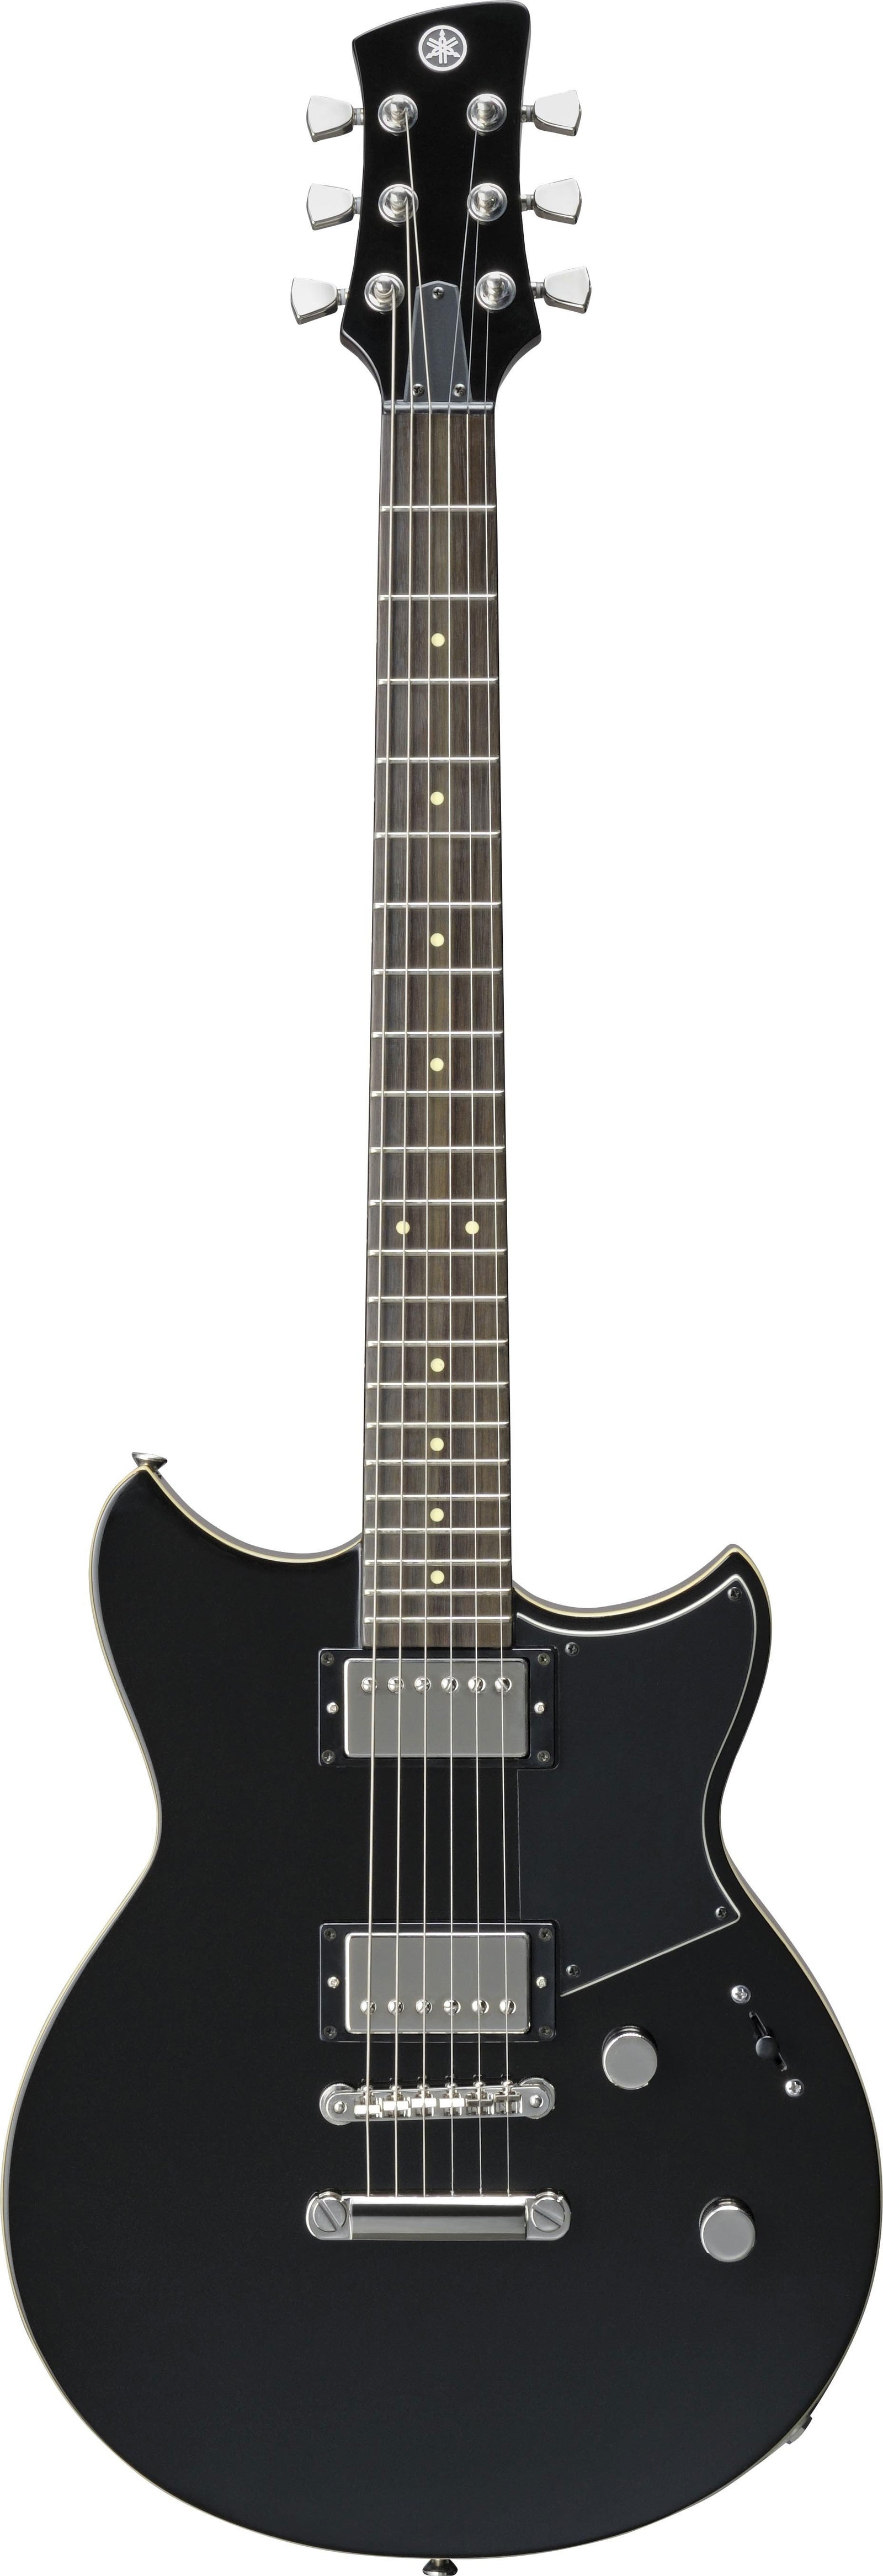 Used Yamaha Revstar RS420 BST Electric Guitar - Black Steel